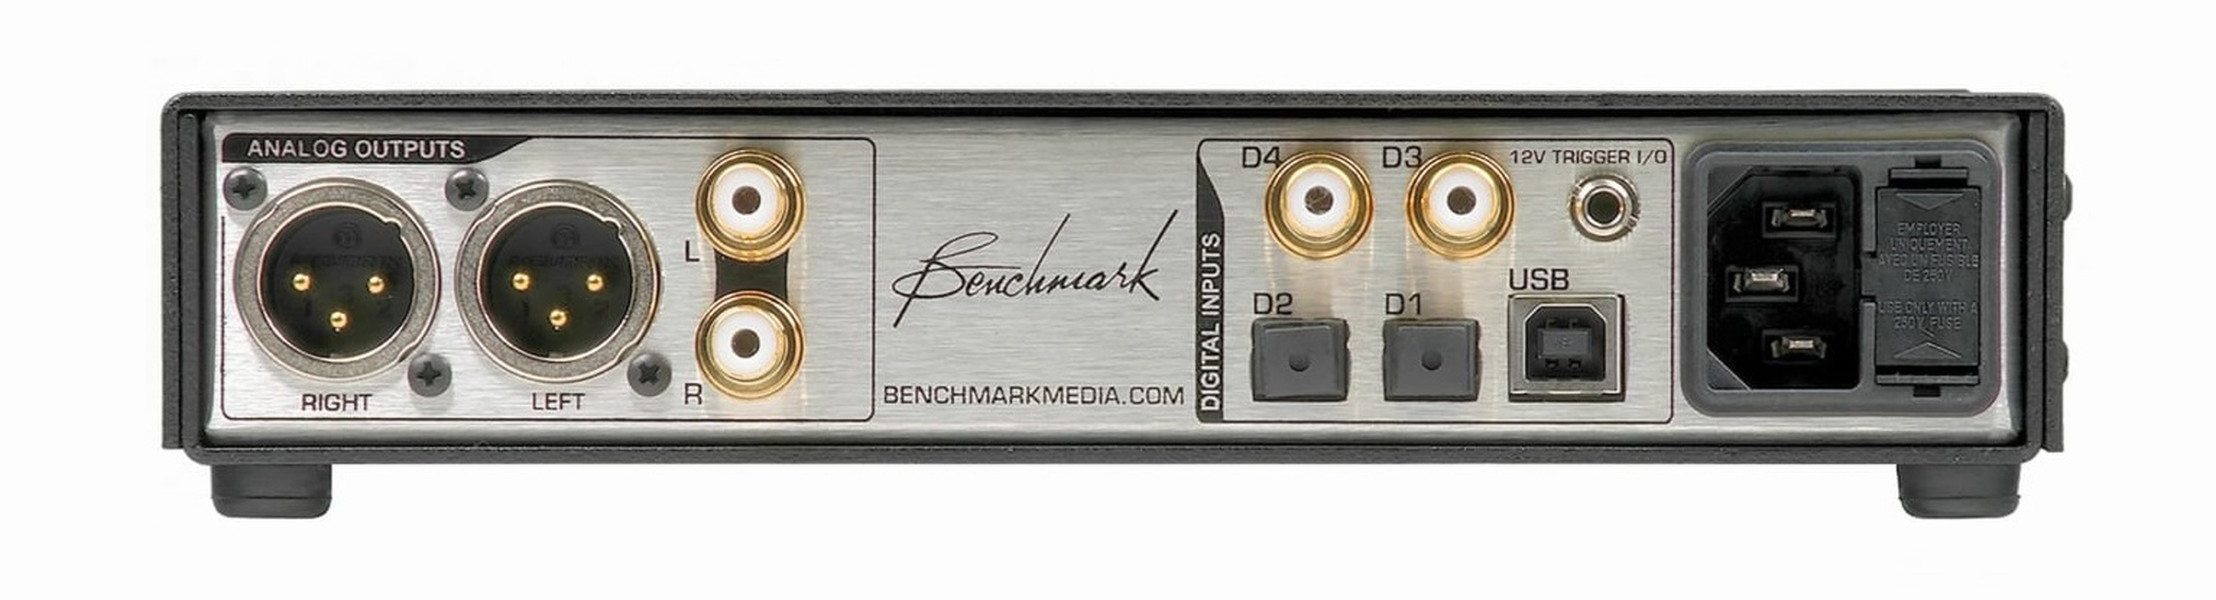 Benchmark DAC3 B